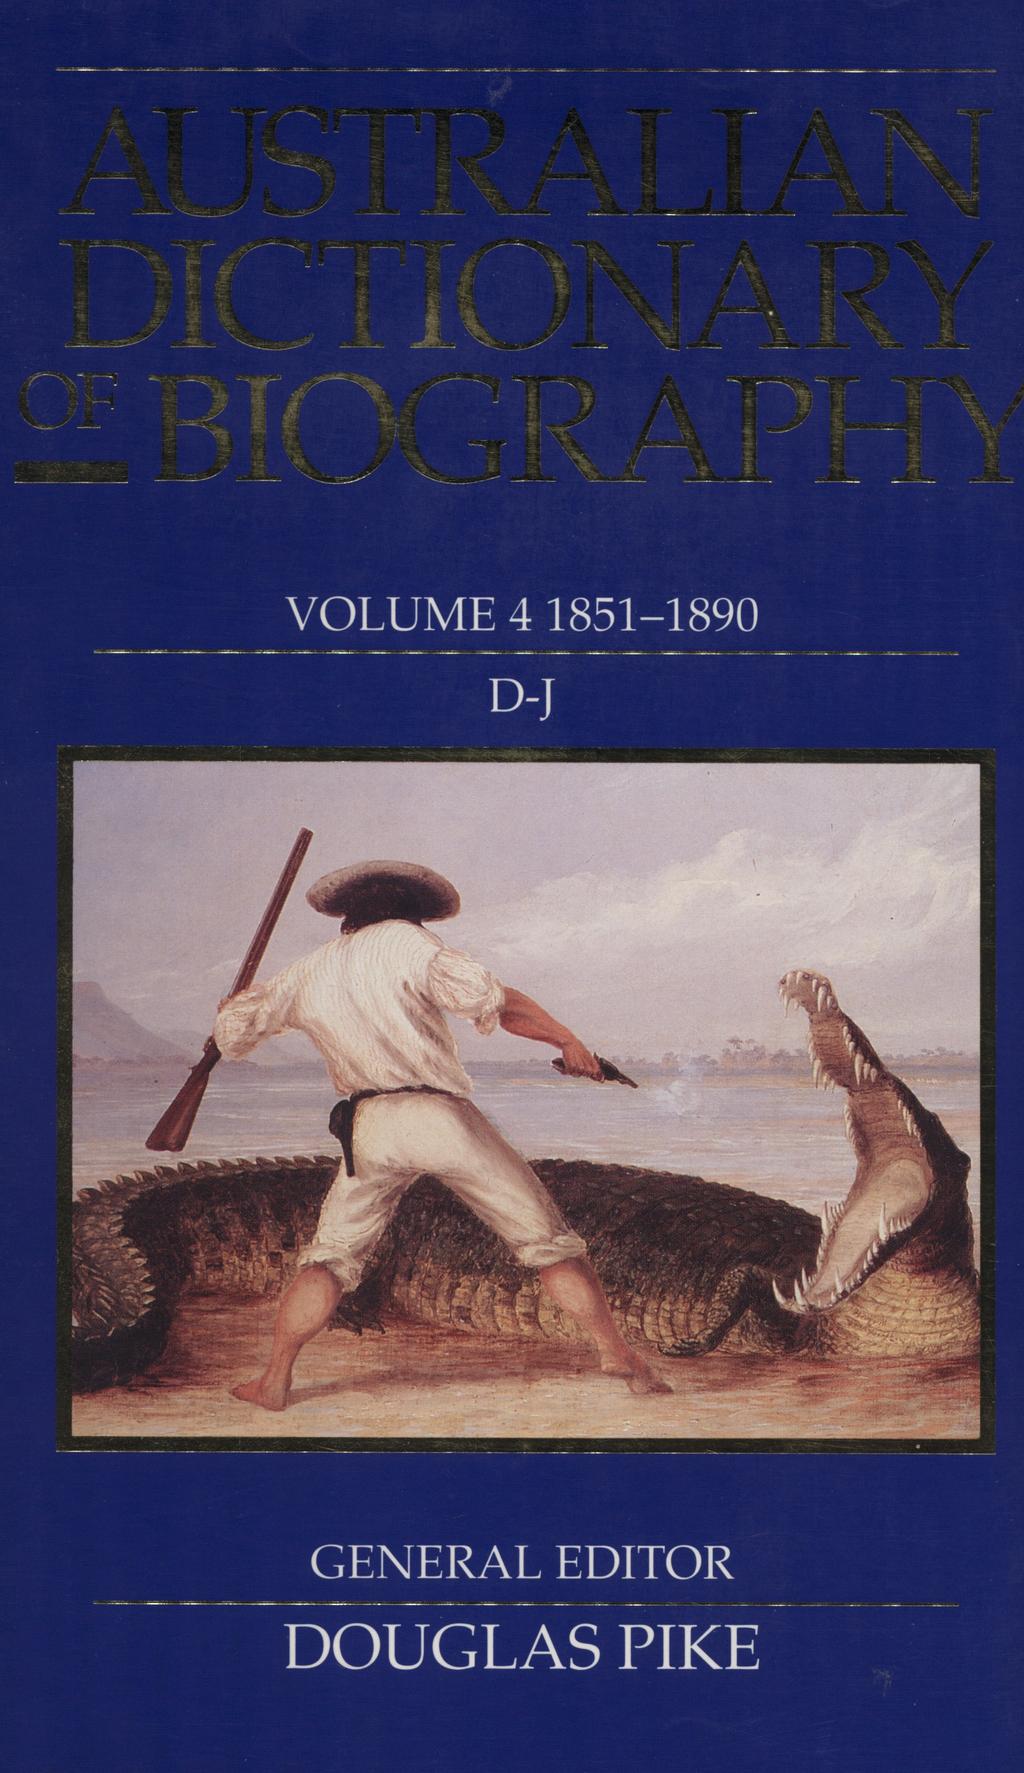 VOLUME 4 1851-1890